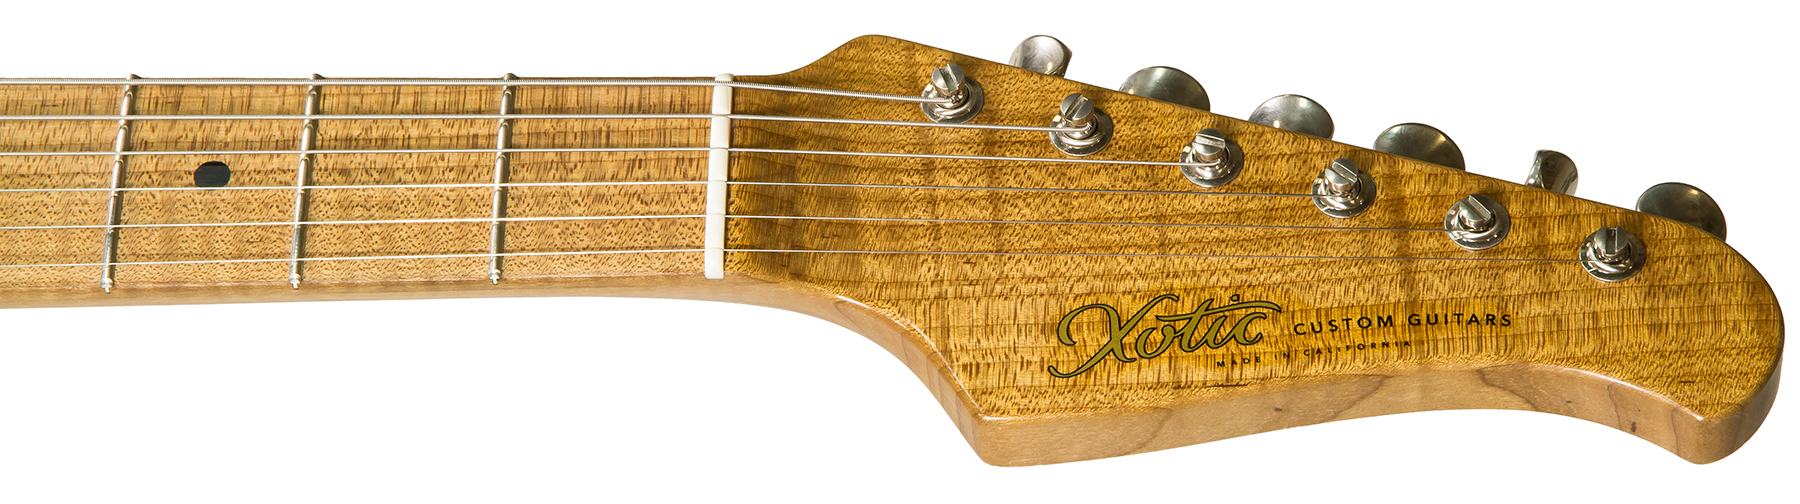 Xotic Xsc-1 Alder California Classic 3s Mn - Medium Aging Seafoam Green - E-Gitarre in Str-Form - Variation 5